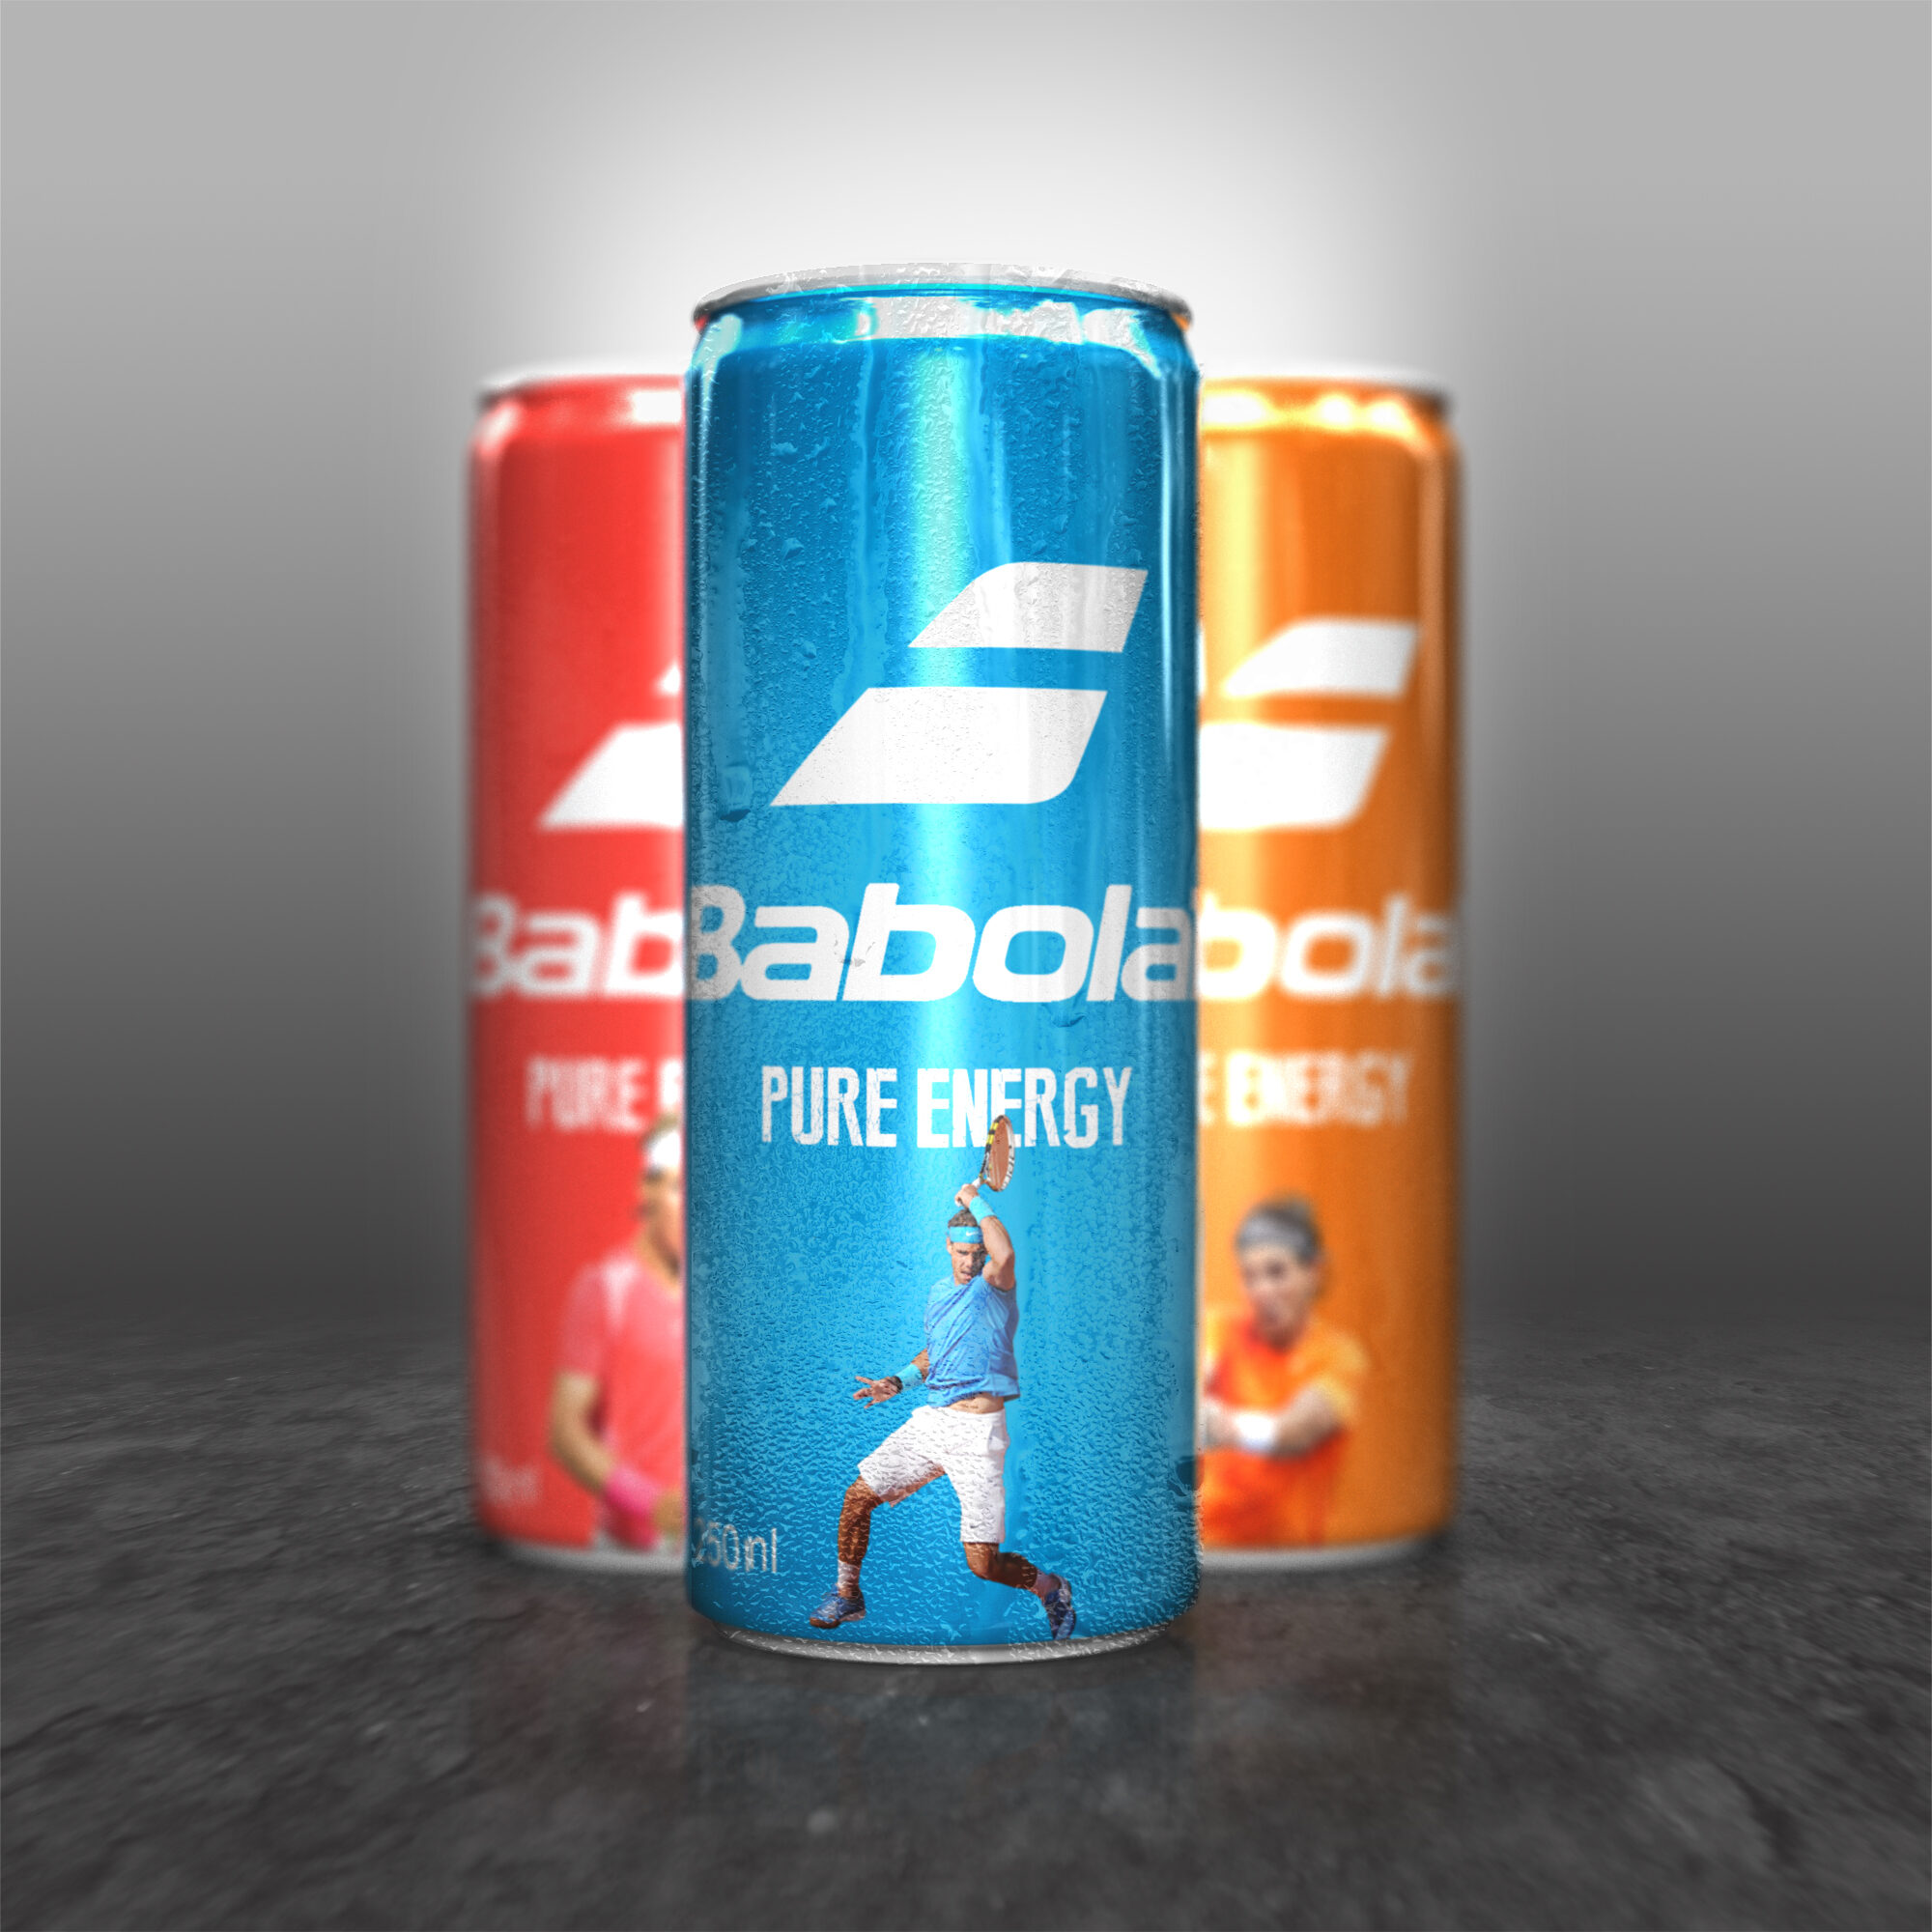 Babolat-Pure-Energy-Drink-Rafael-Nadal